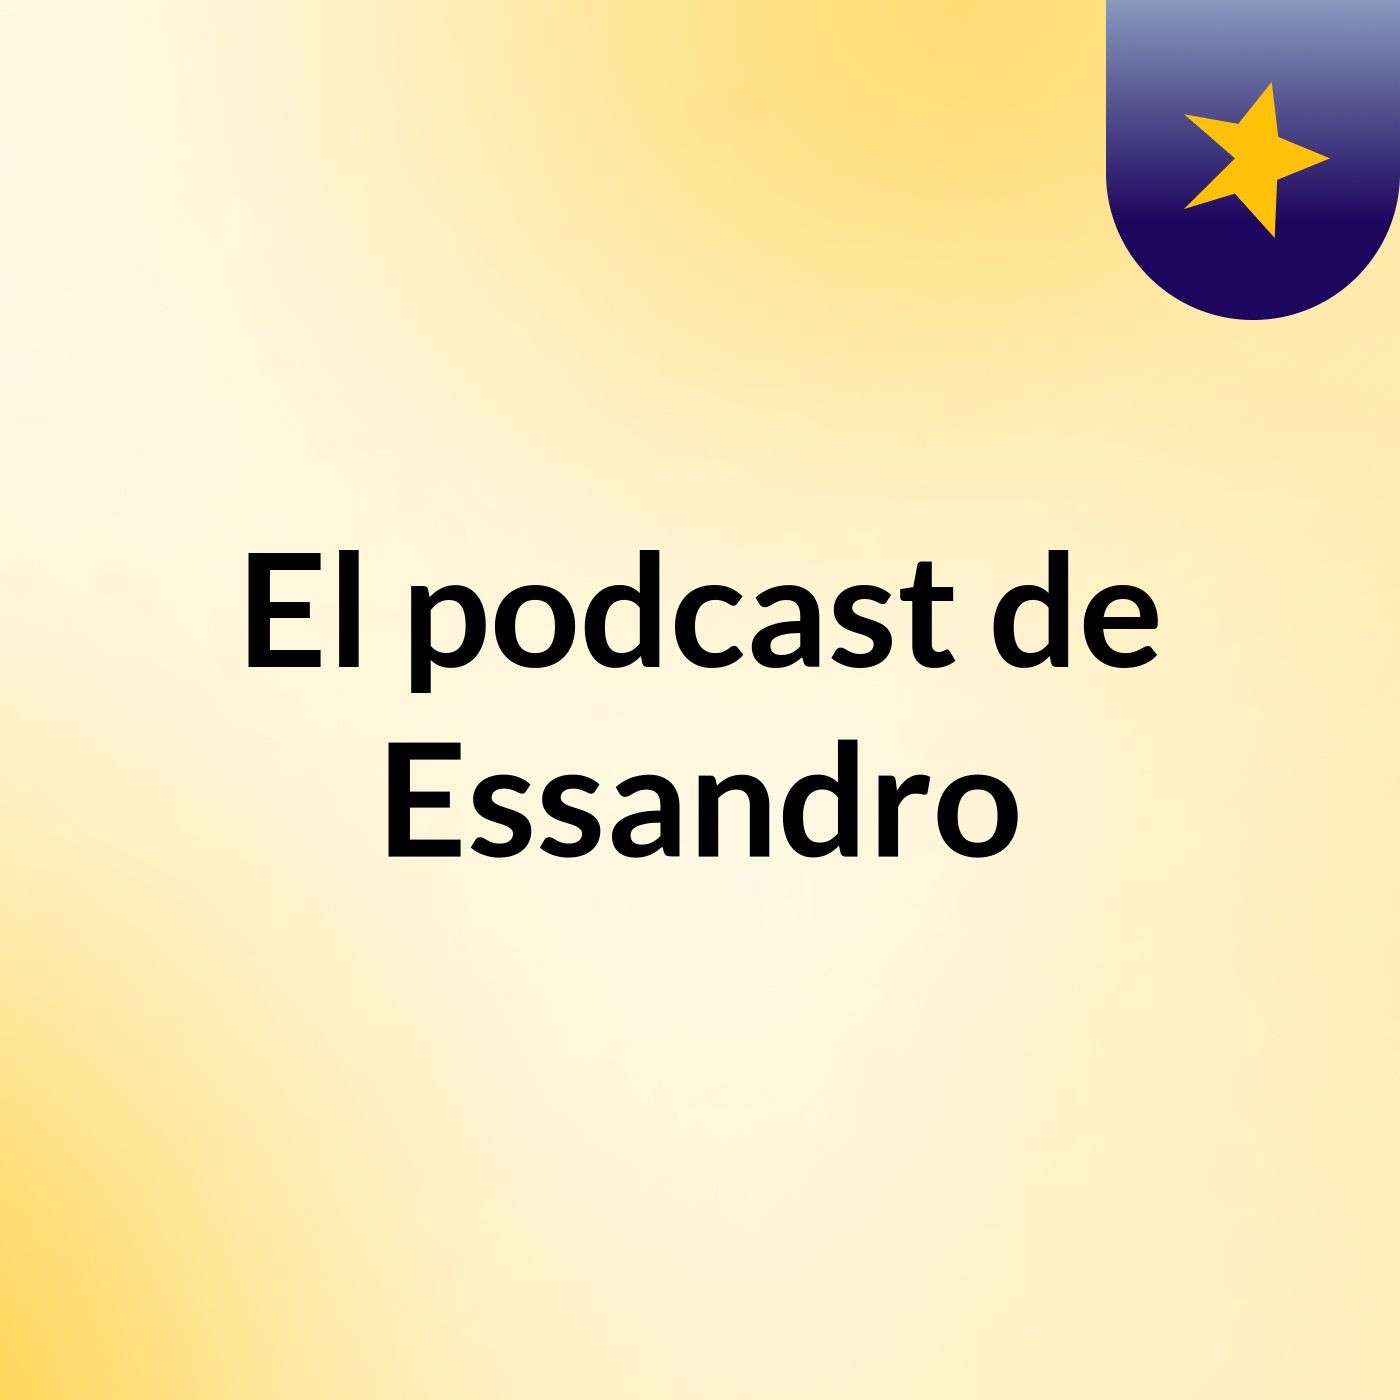 El podcast de Essandro